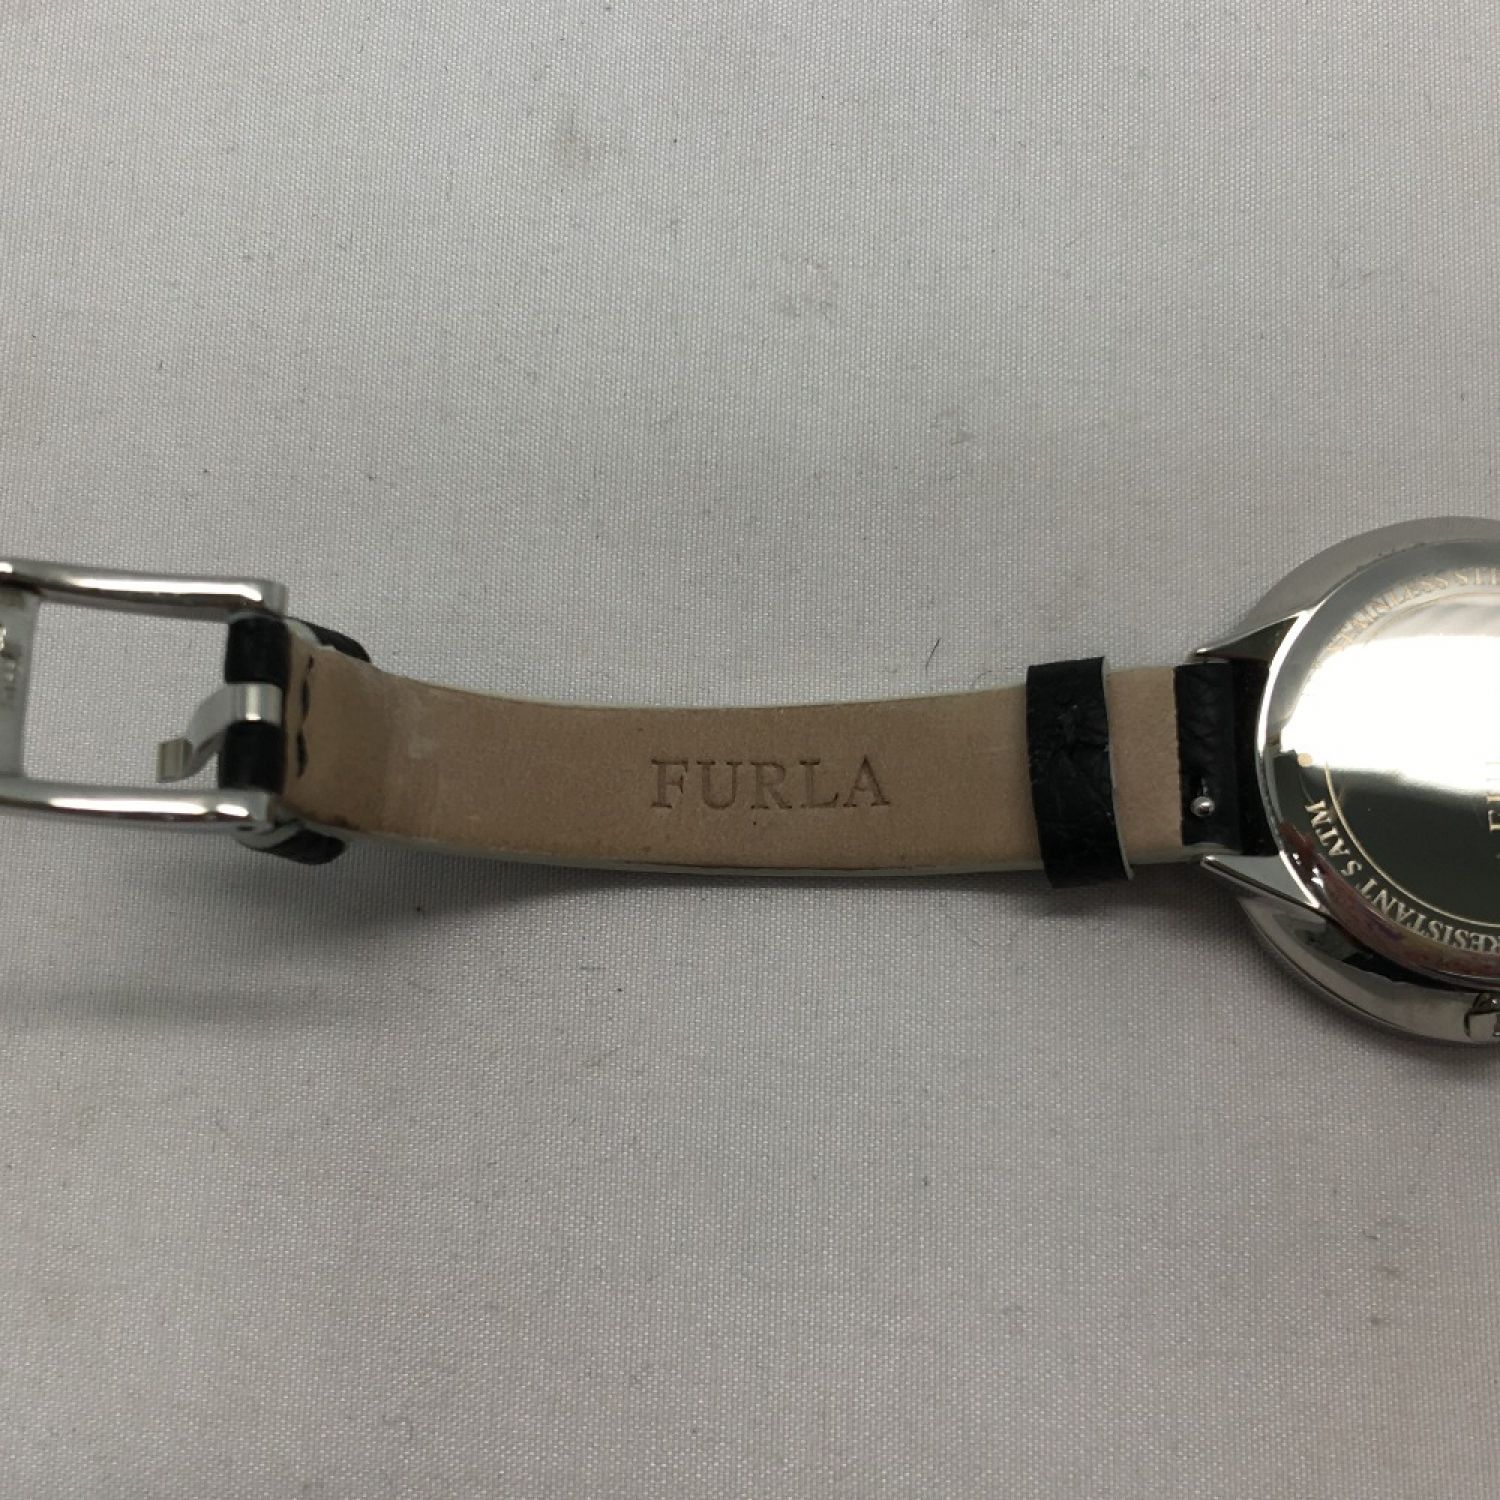 FURLA フルラ 腕時計 レディース CLUB 付け替え可能ベゼル付け替え可能ベゼル付き